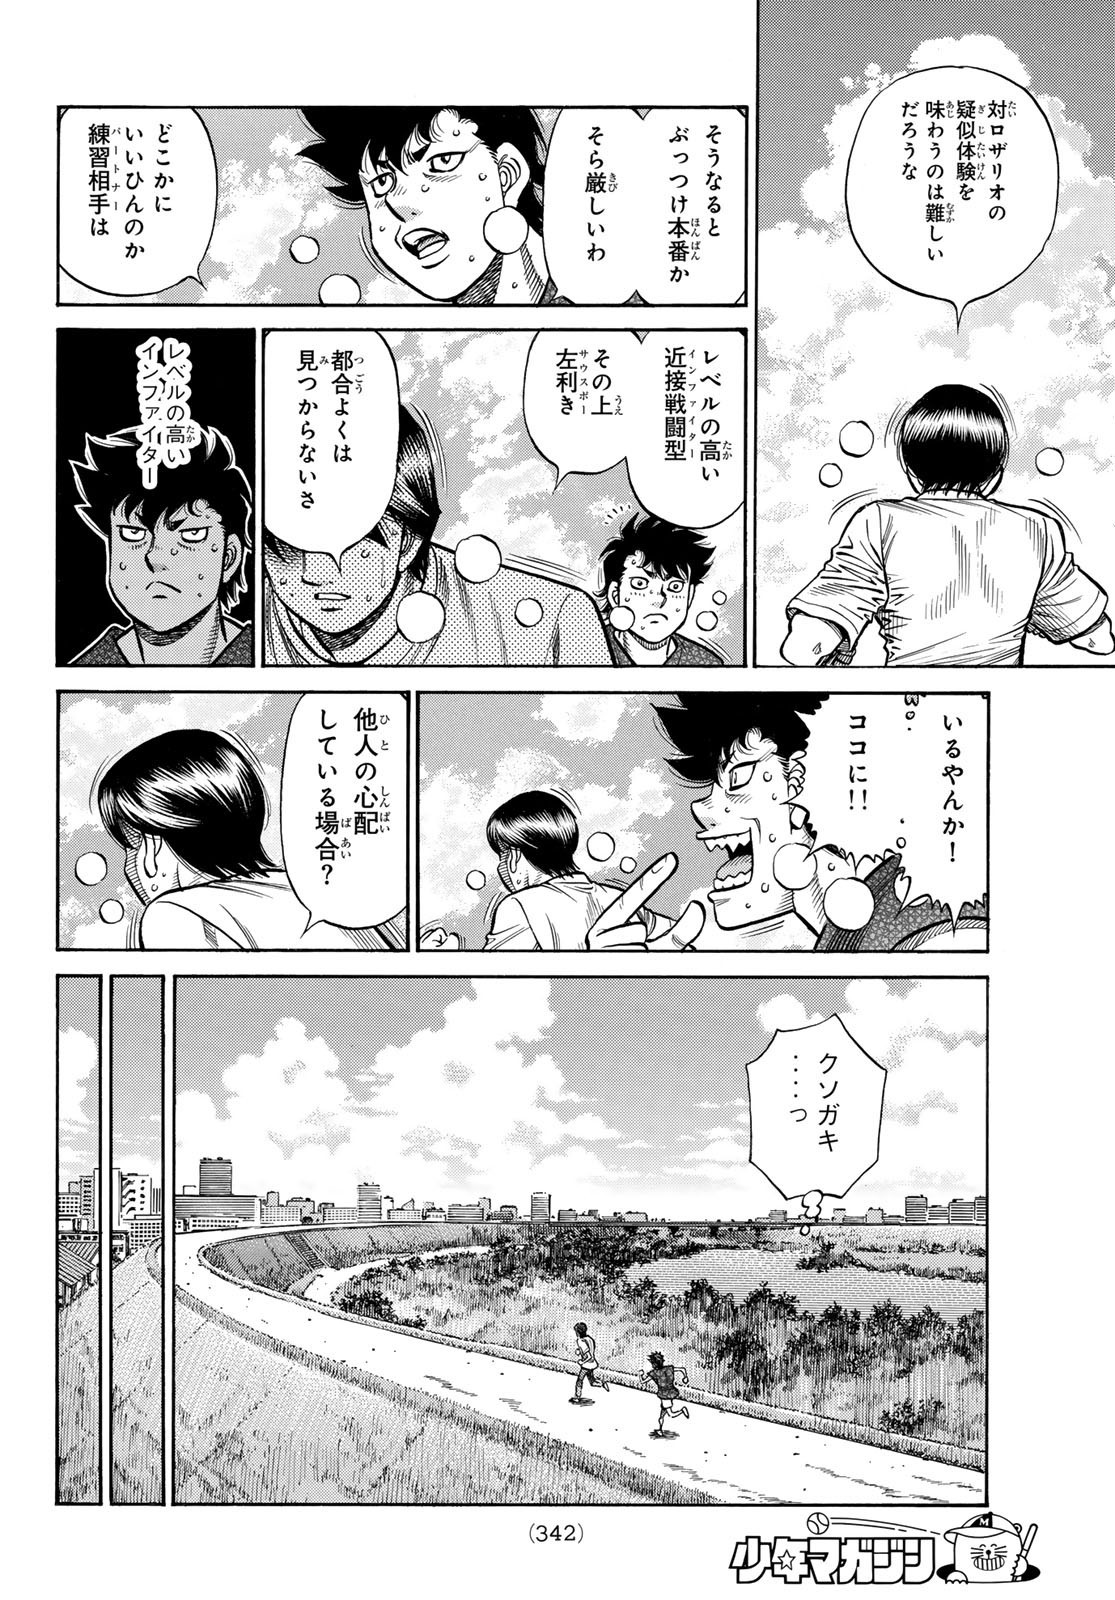 Hajime no Ippo - Chapter 1432 - Page 2